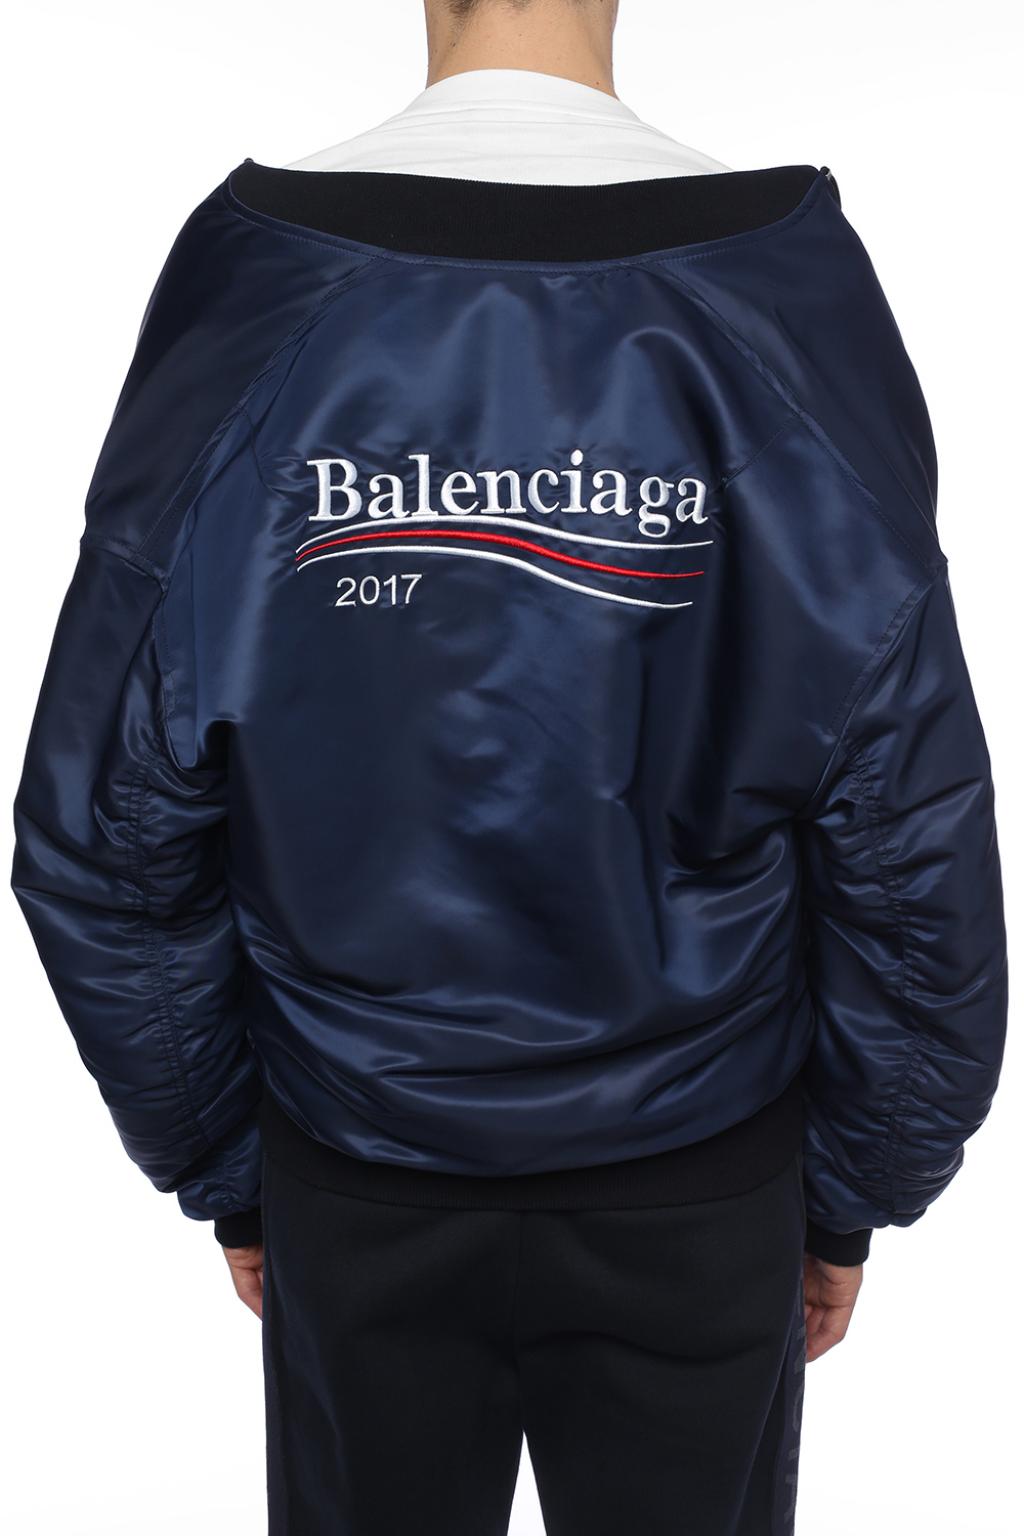 balenciaga bomber jacket 2017